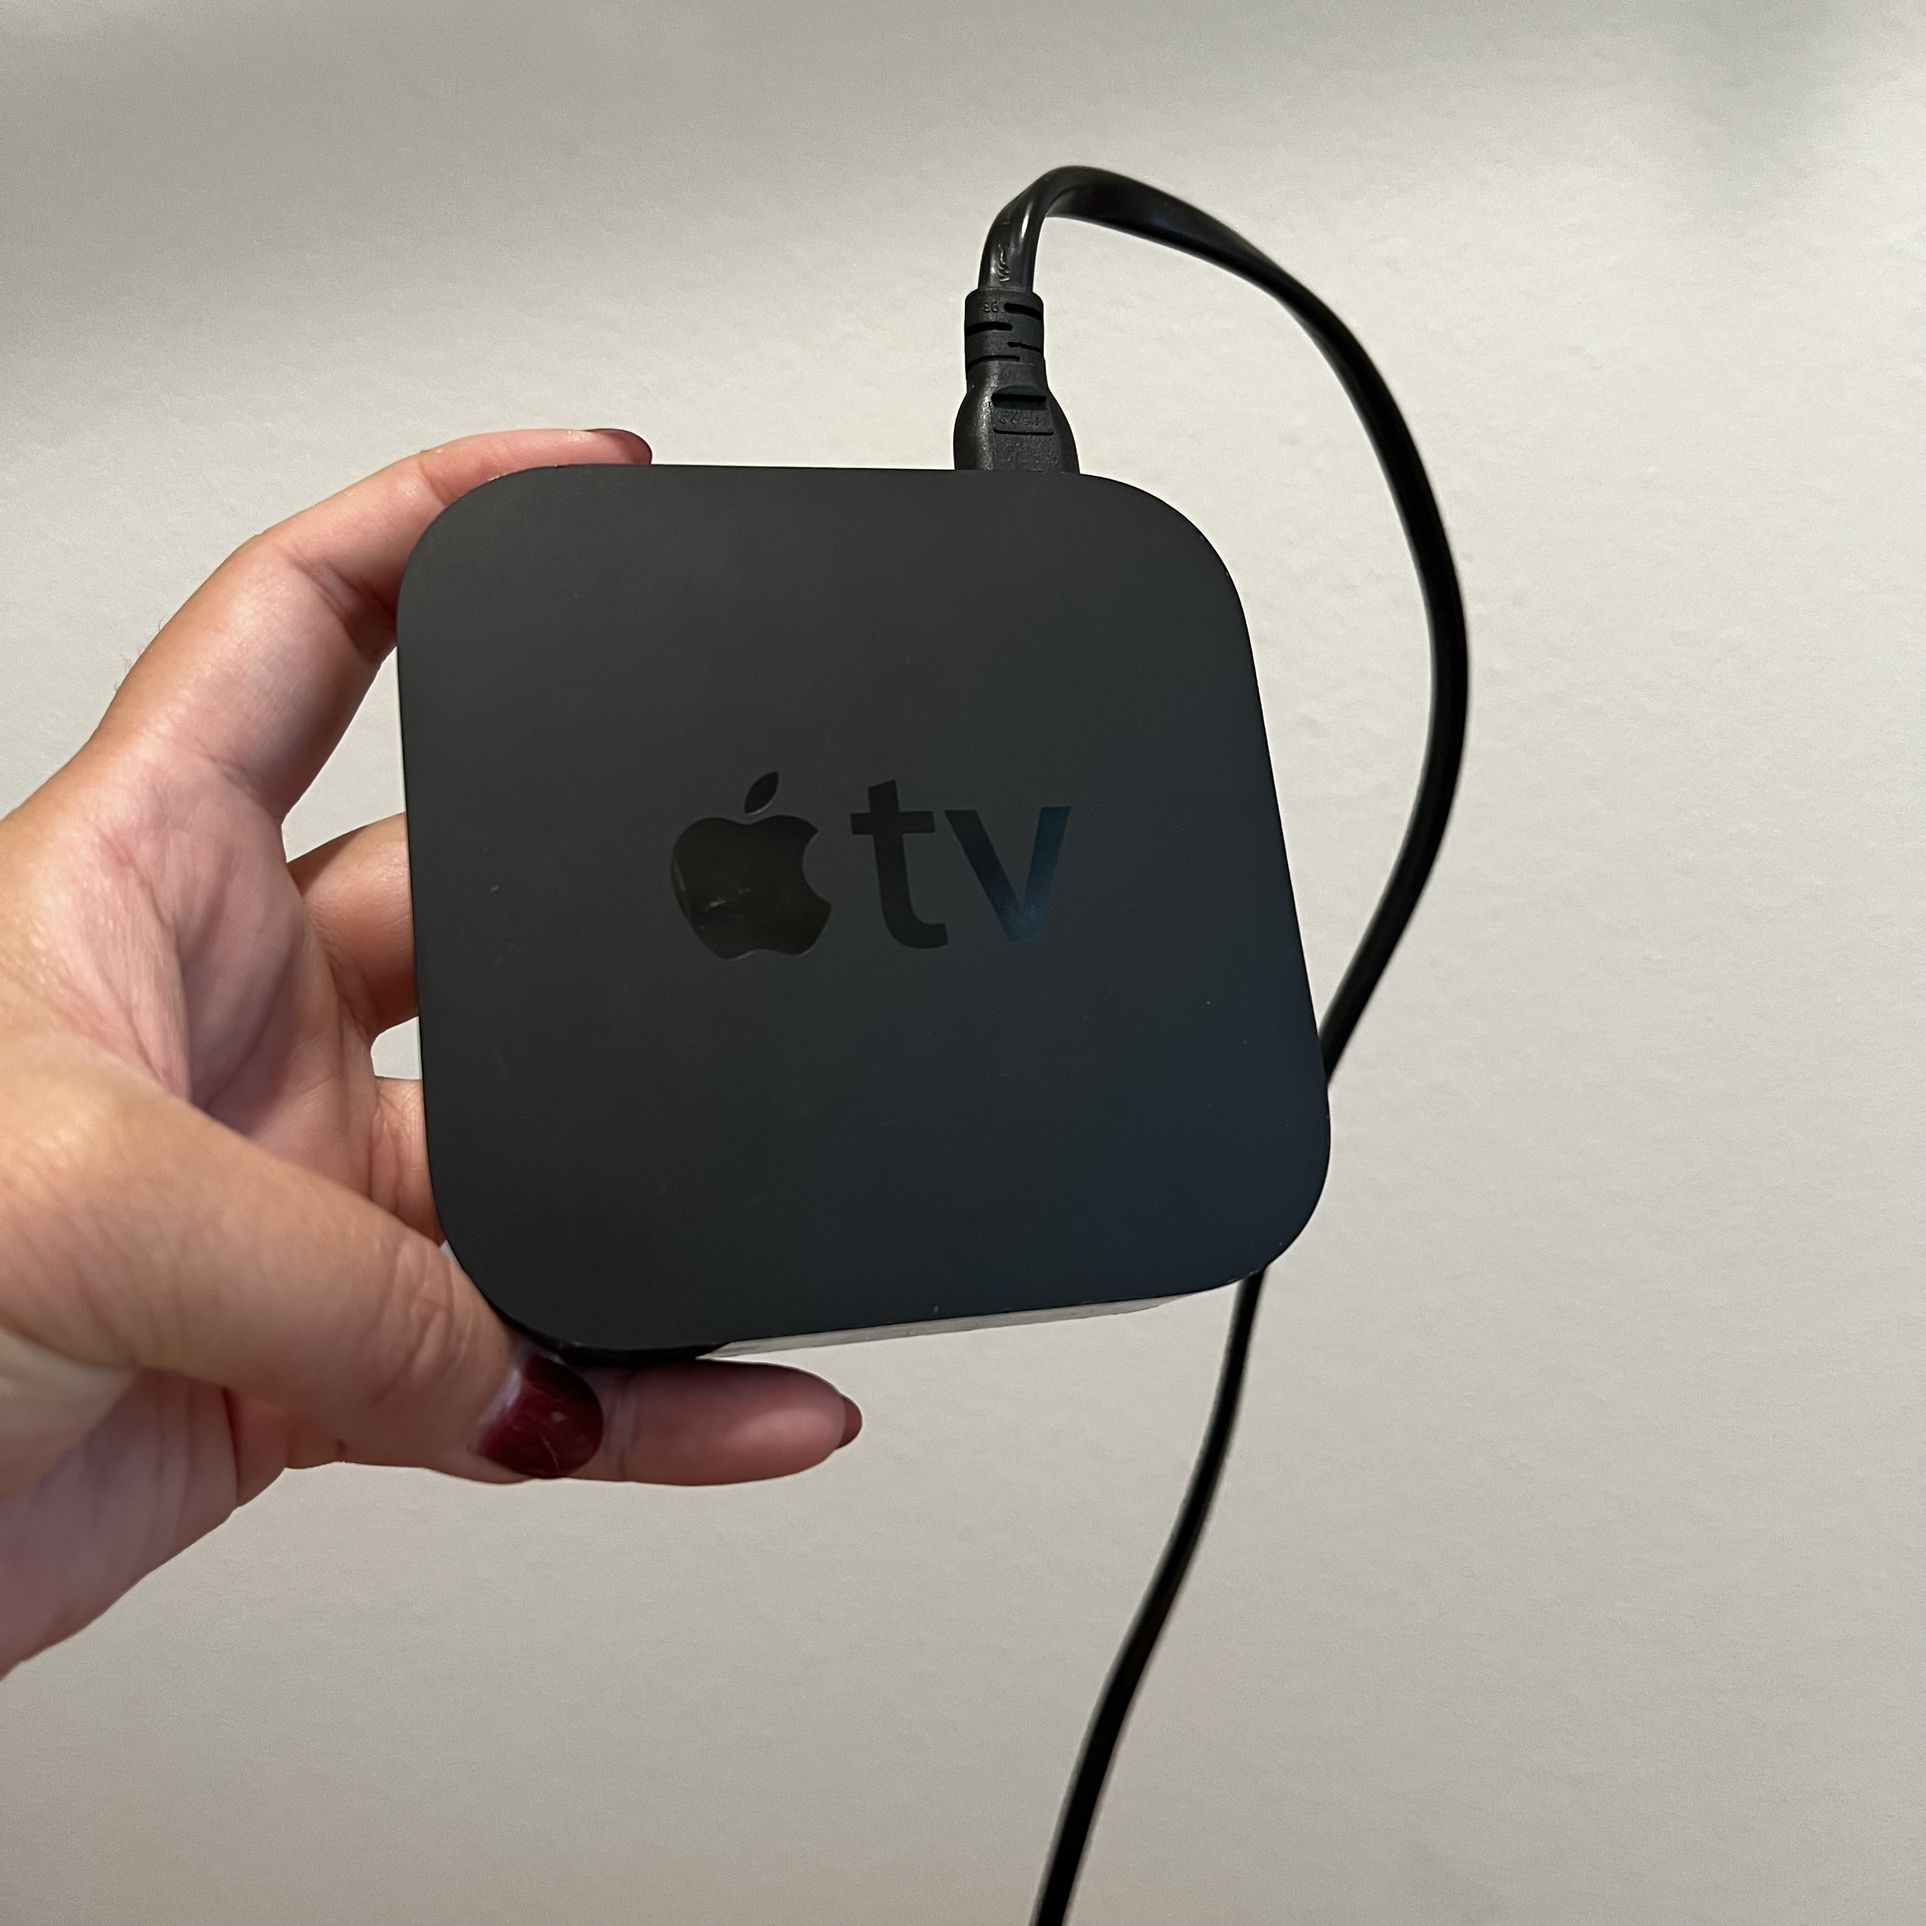 Apple TV (3rd gen) + remote